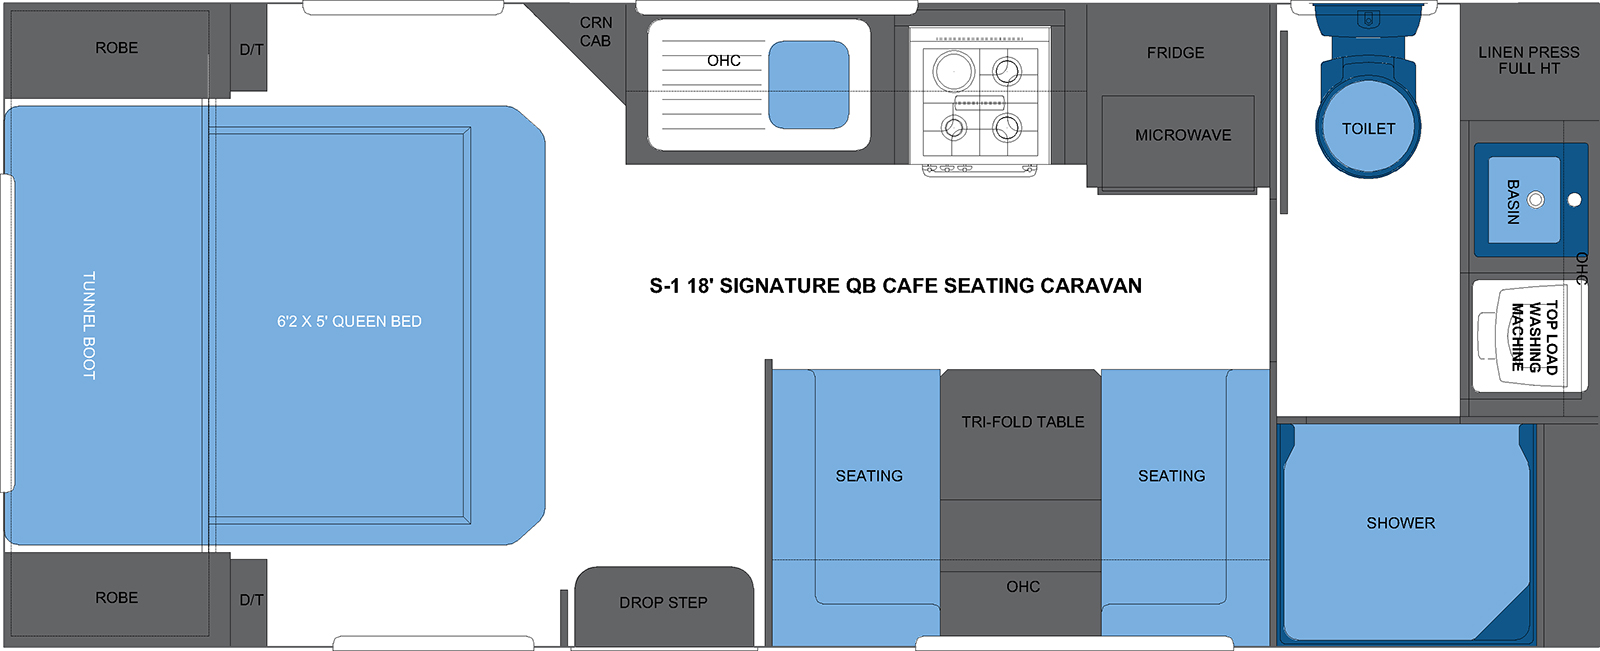 S-1 18' SIGNATURE QB CAFE SEATING CARAVAN